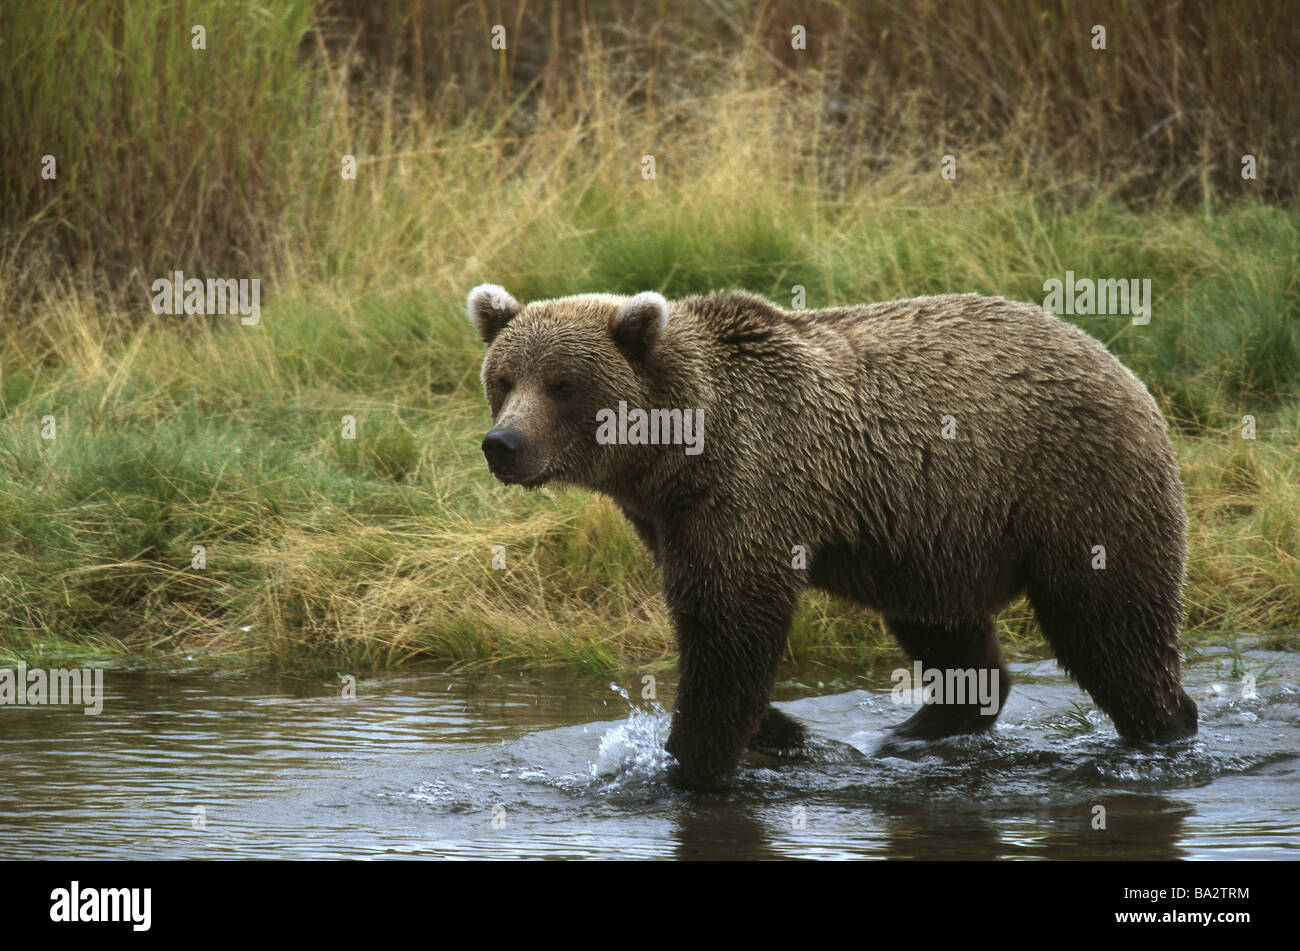 USA Alaska Katami national-park river grizzly bear Ursus arctos horribilis United States North America water animal bear Stock Photo